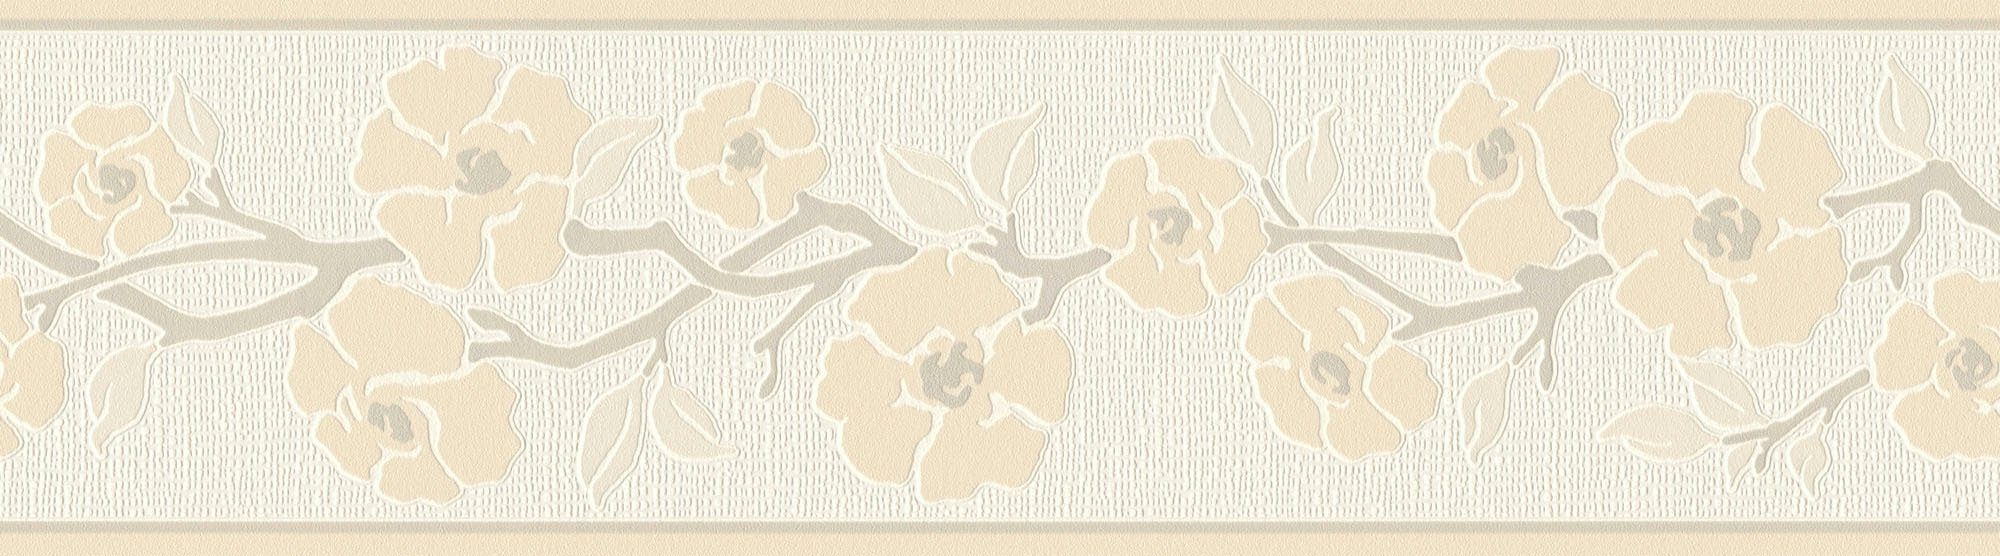 A.S. Création Bordüre Only Borders geblümt, Bordüre Tapete 11, Blumen Blumen floral, natürlich, beige/creme strukturiert